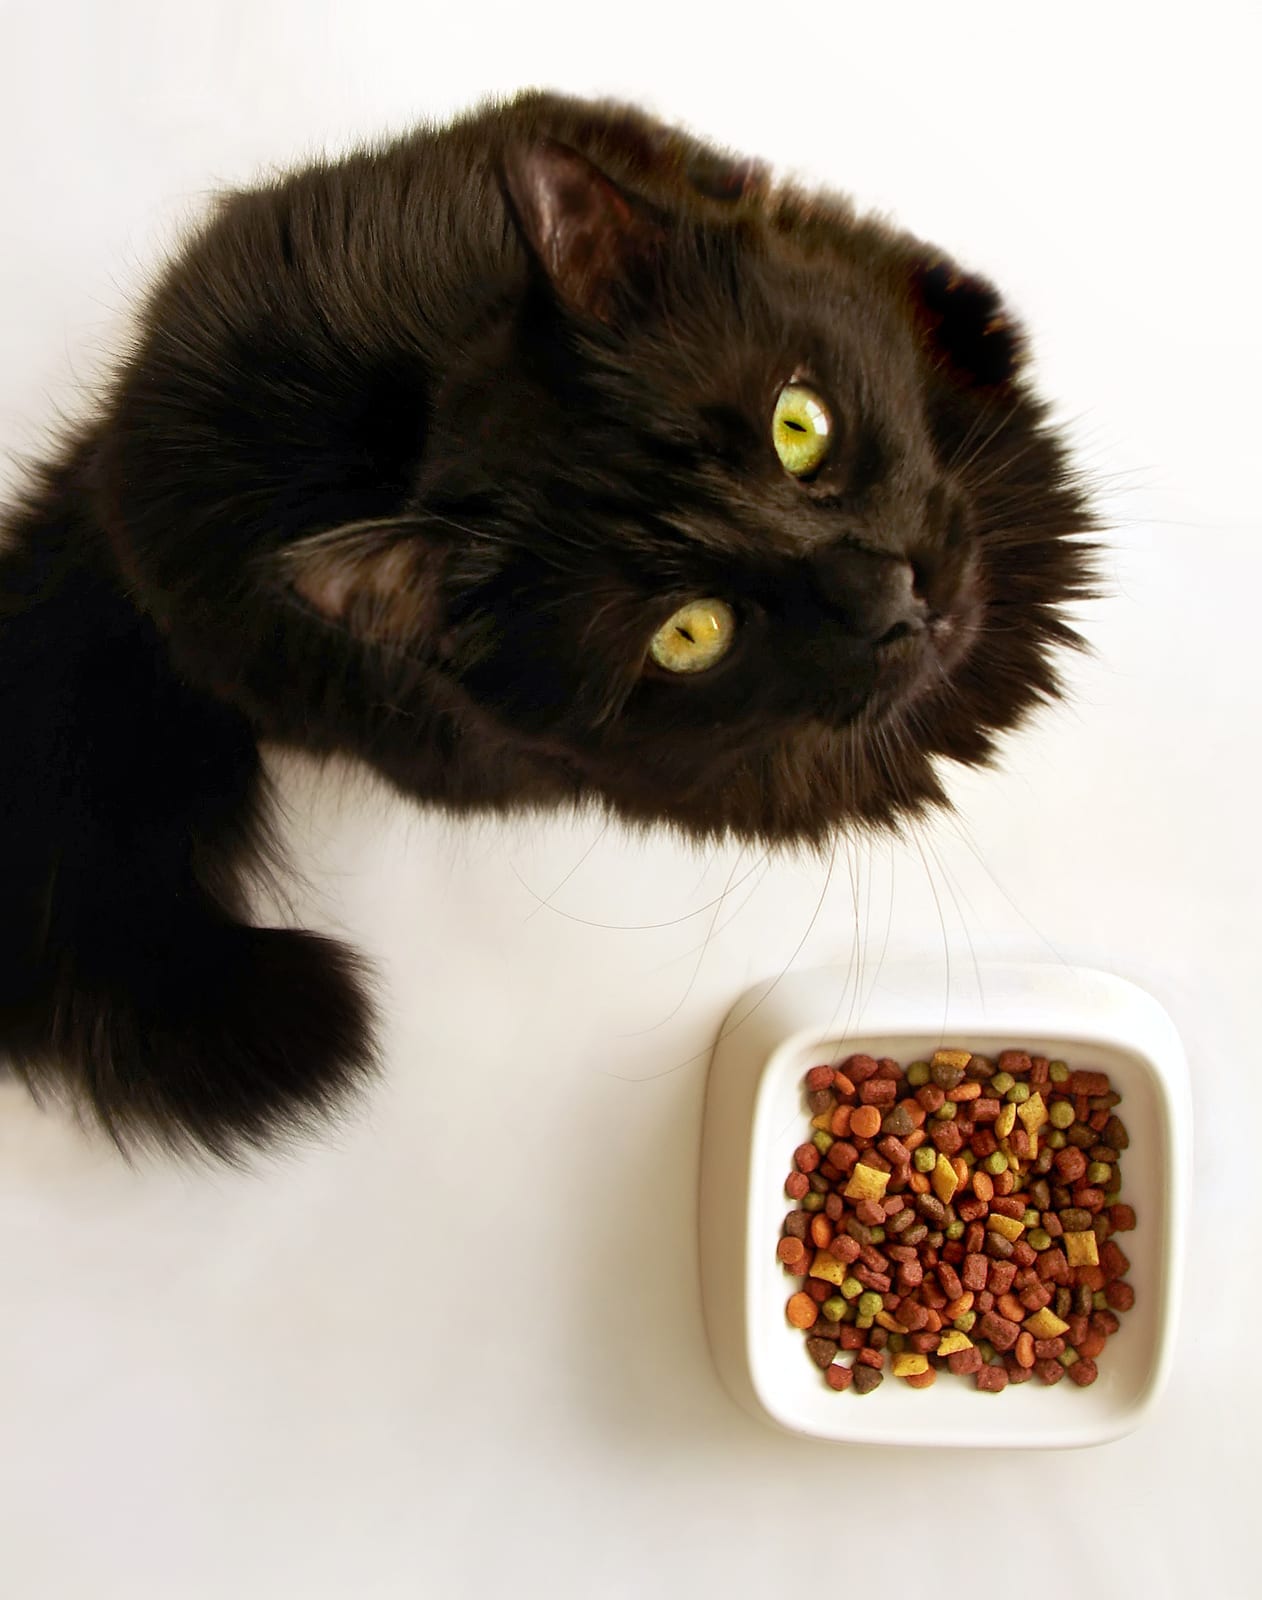 Cat on Low Carb Diet